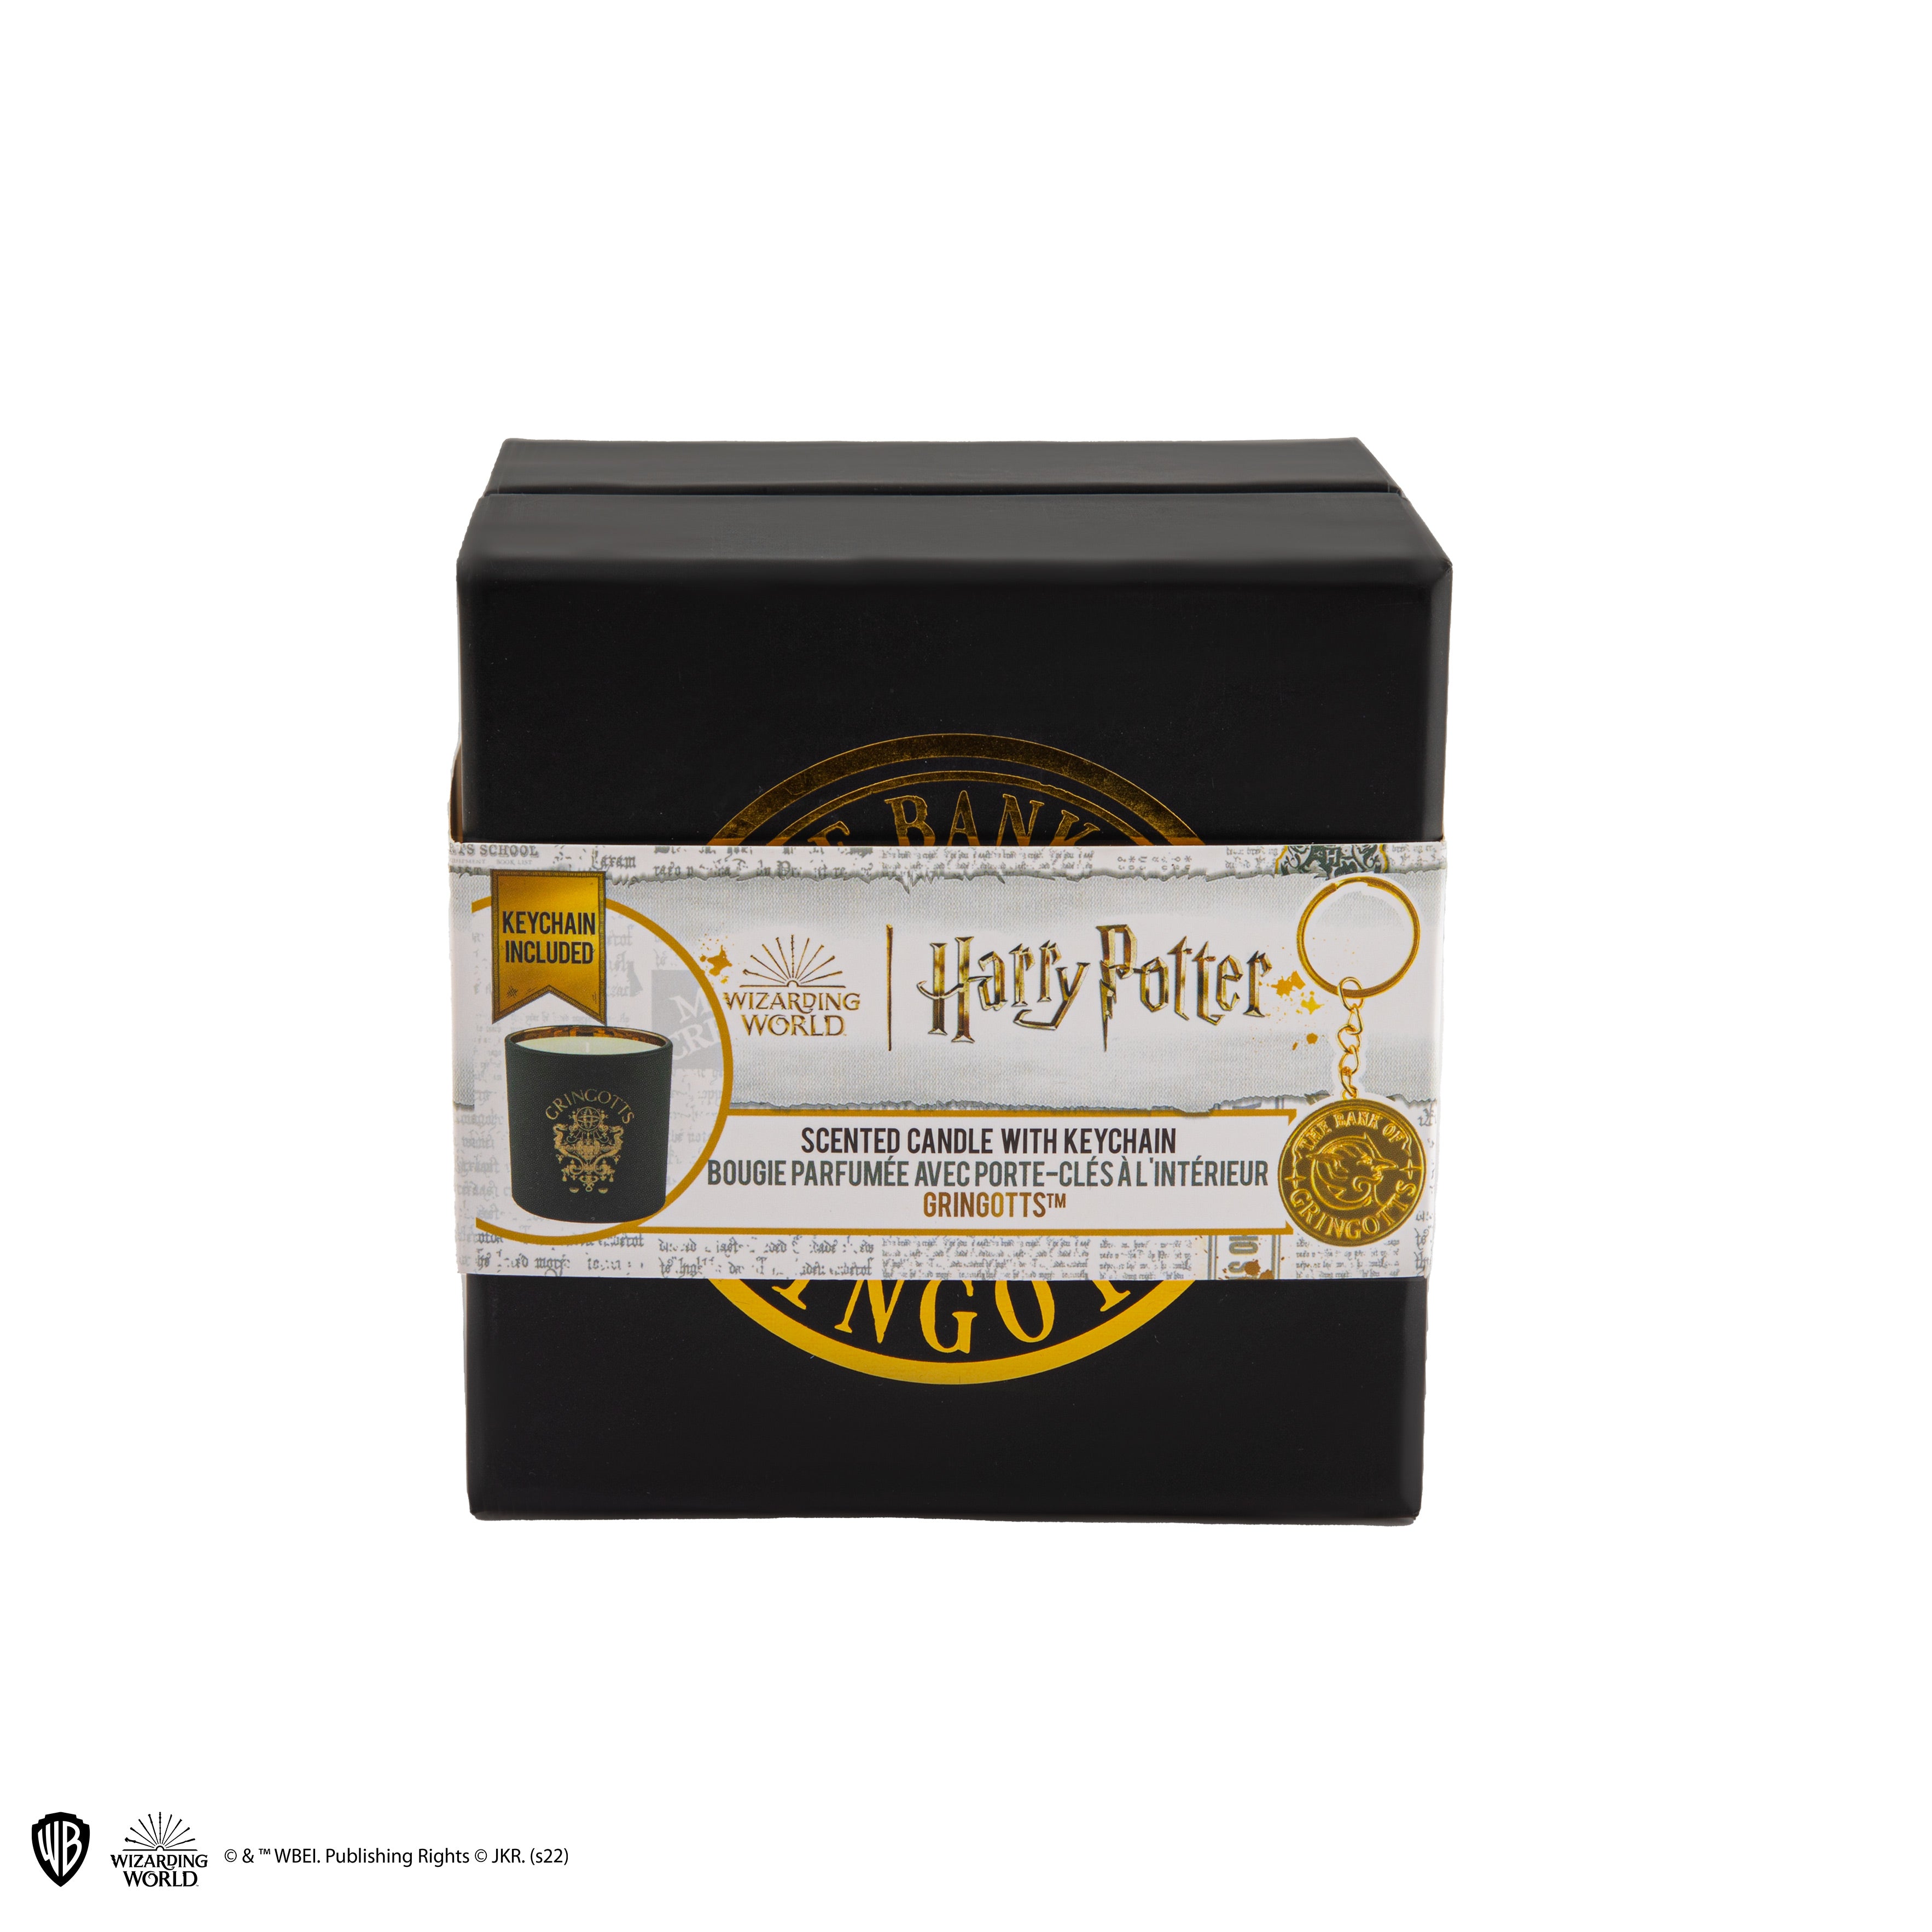 Porte-bougies Harry Potter